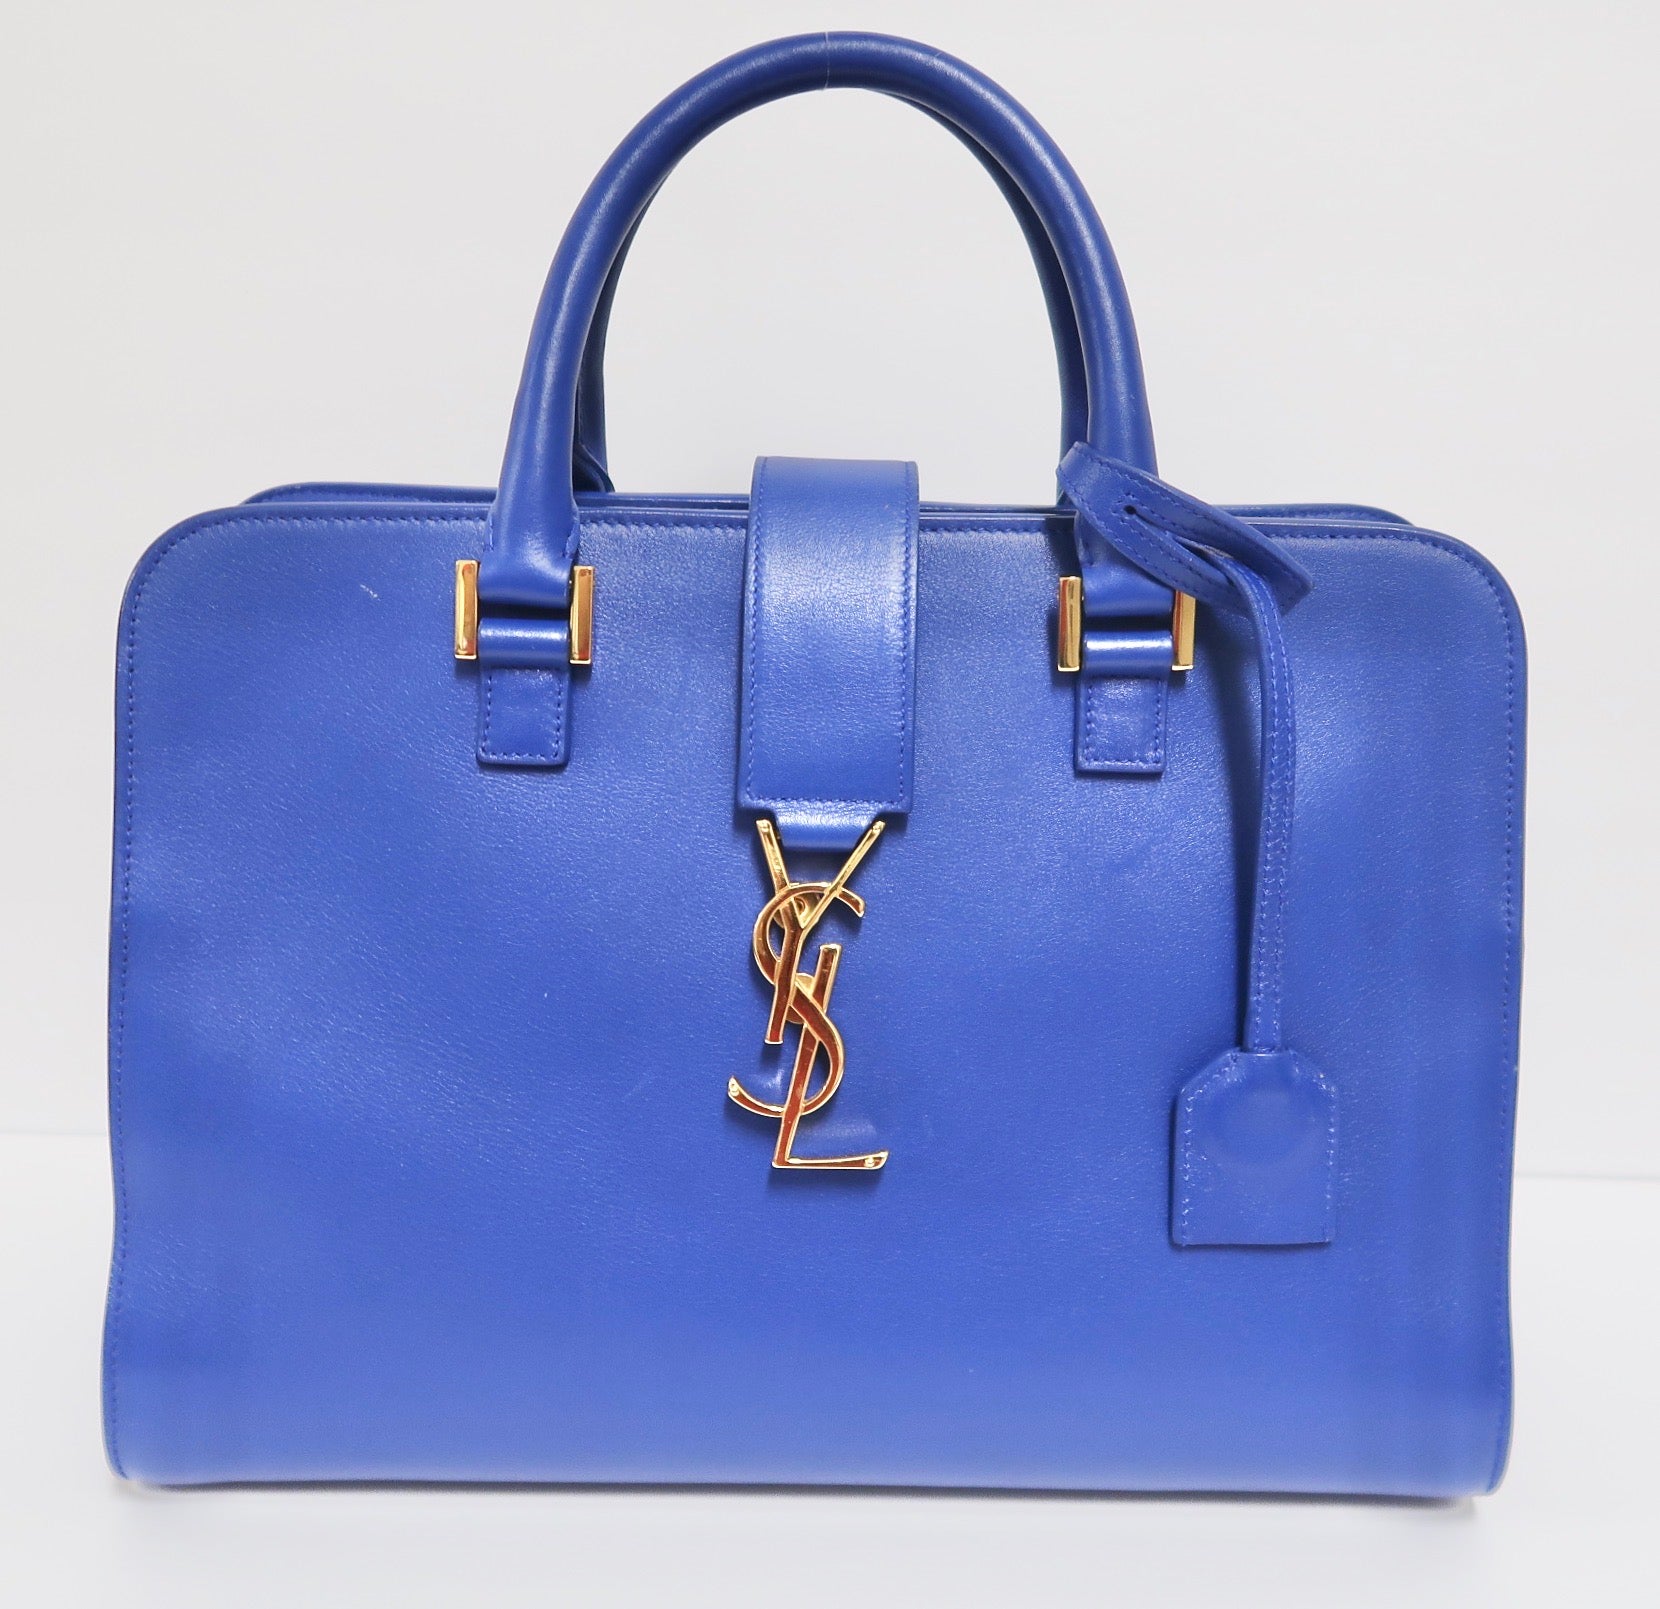 Saint Laurent Navy Blue Calfskin Leather Small Monogram Cabas Bag